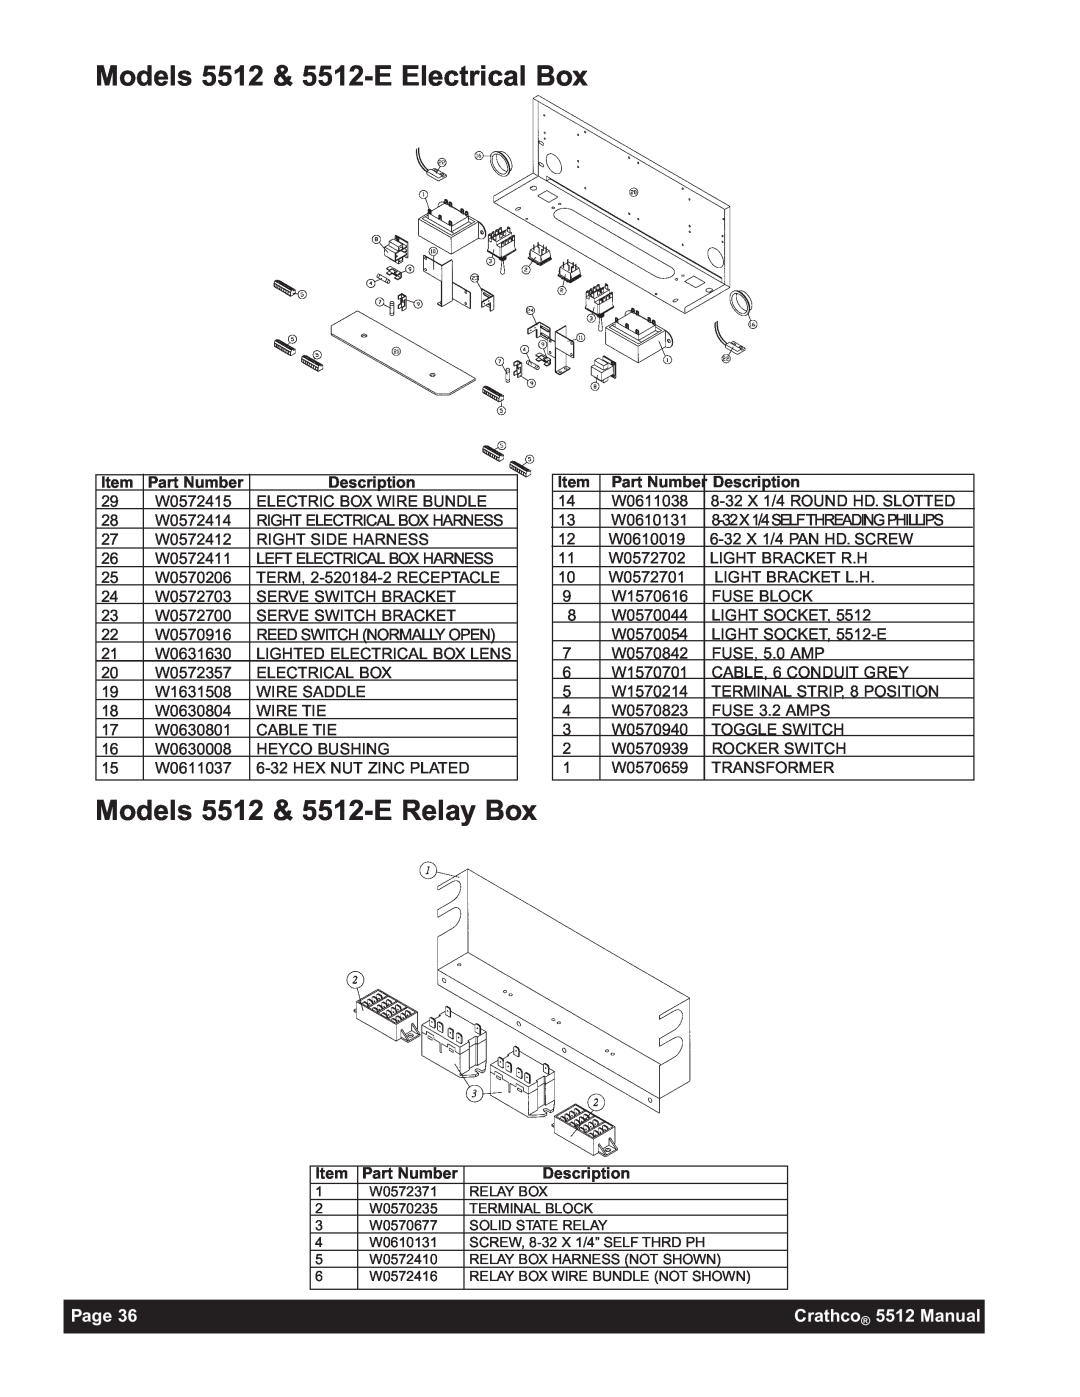 Grindmaster 5512E Models 5512 & 5512-E Electrical Box, Models 5512 & 5512-E Relay Box, Page, Crathco 5512 Manual 